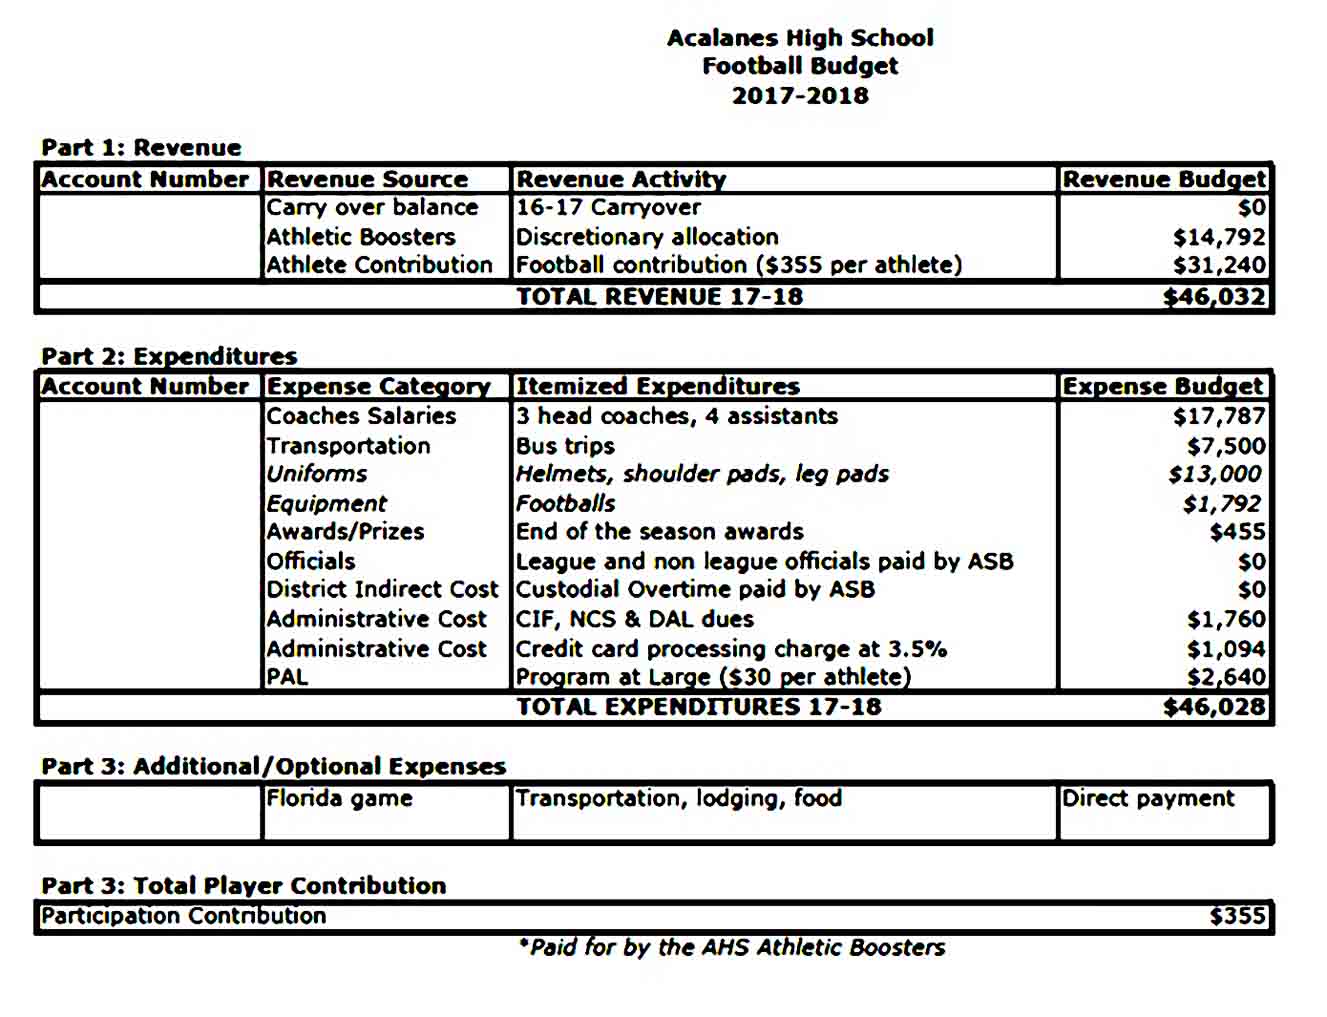 Acalanes High School Football Budget